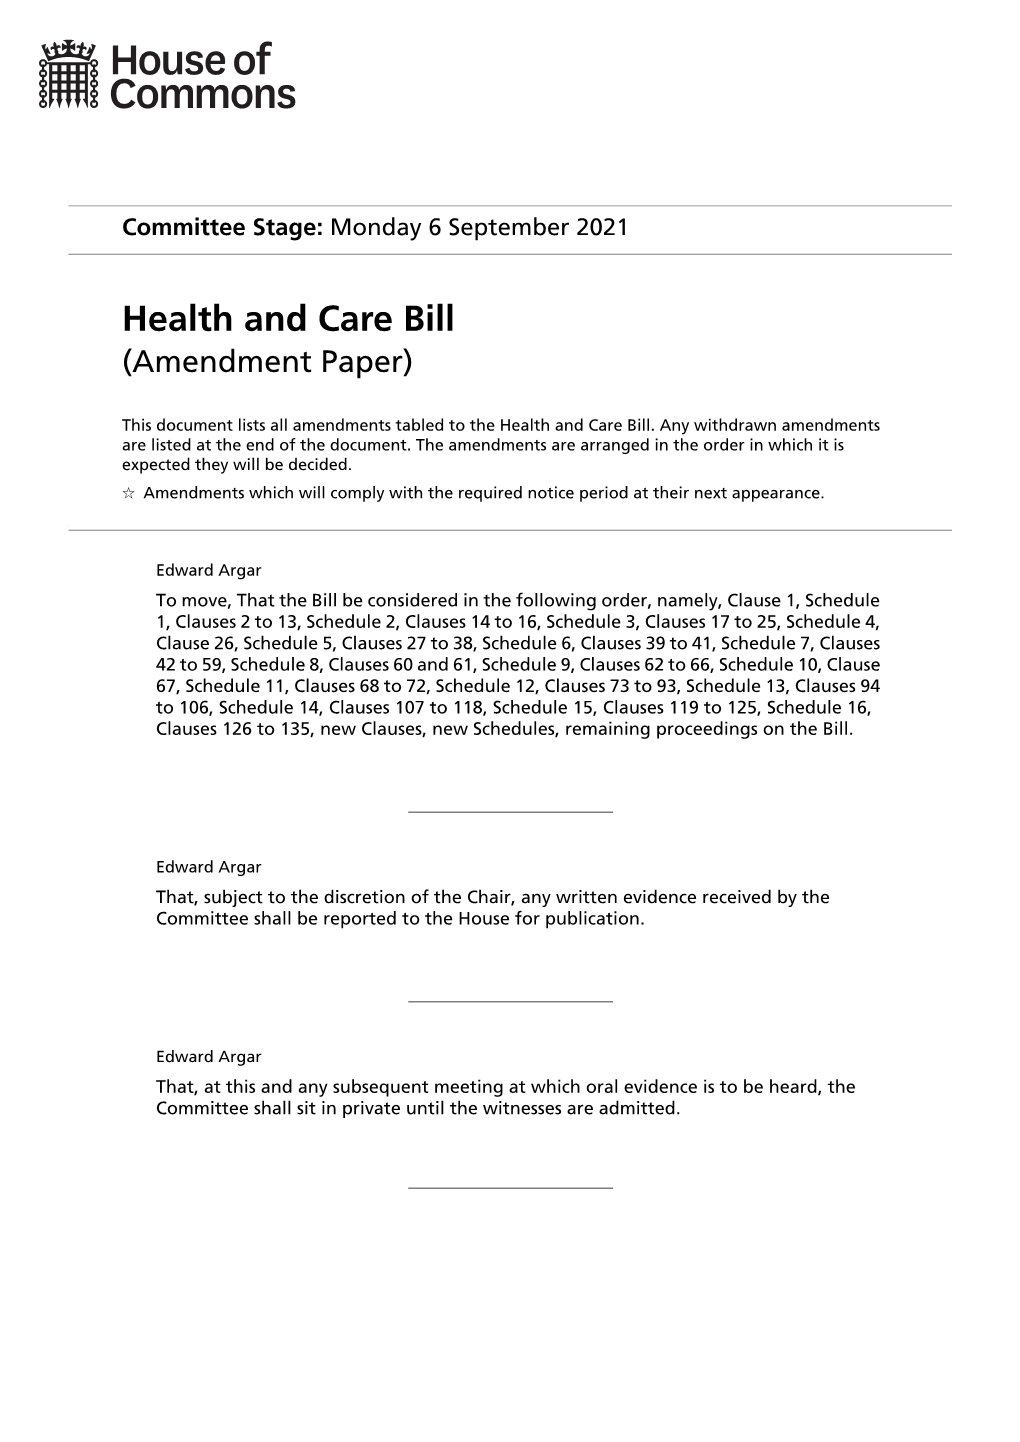 Health and Care Bill (Amendment Paper)